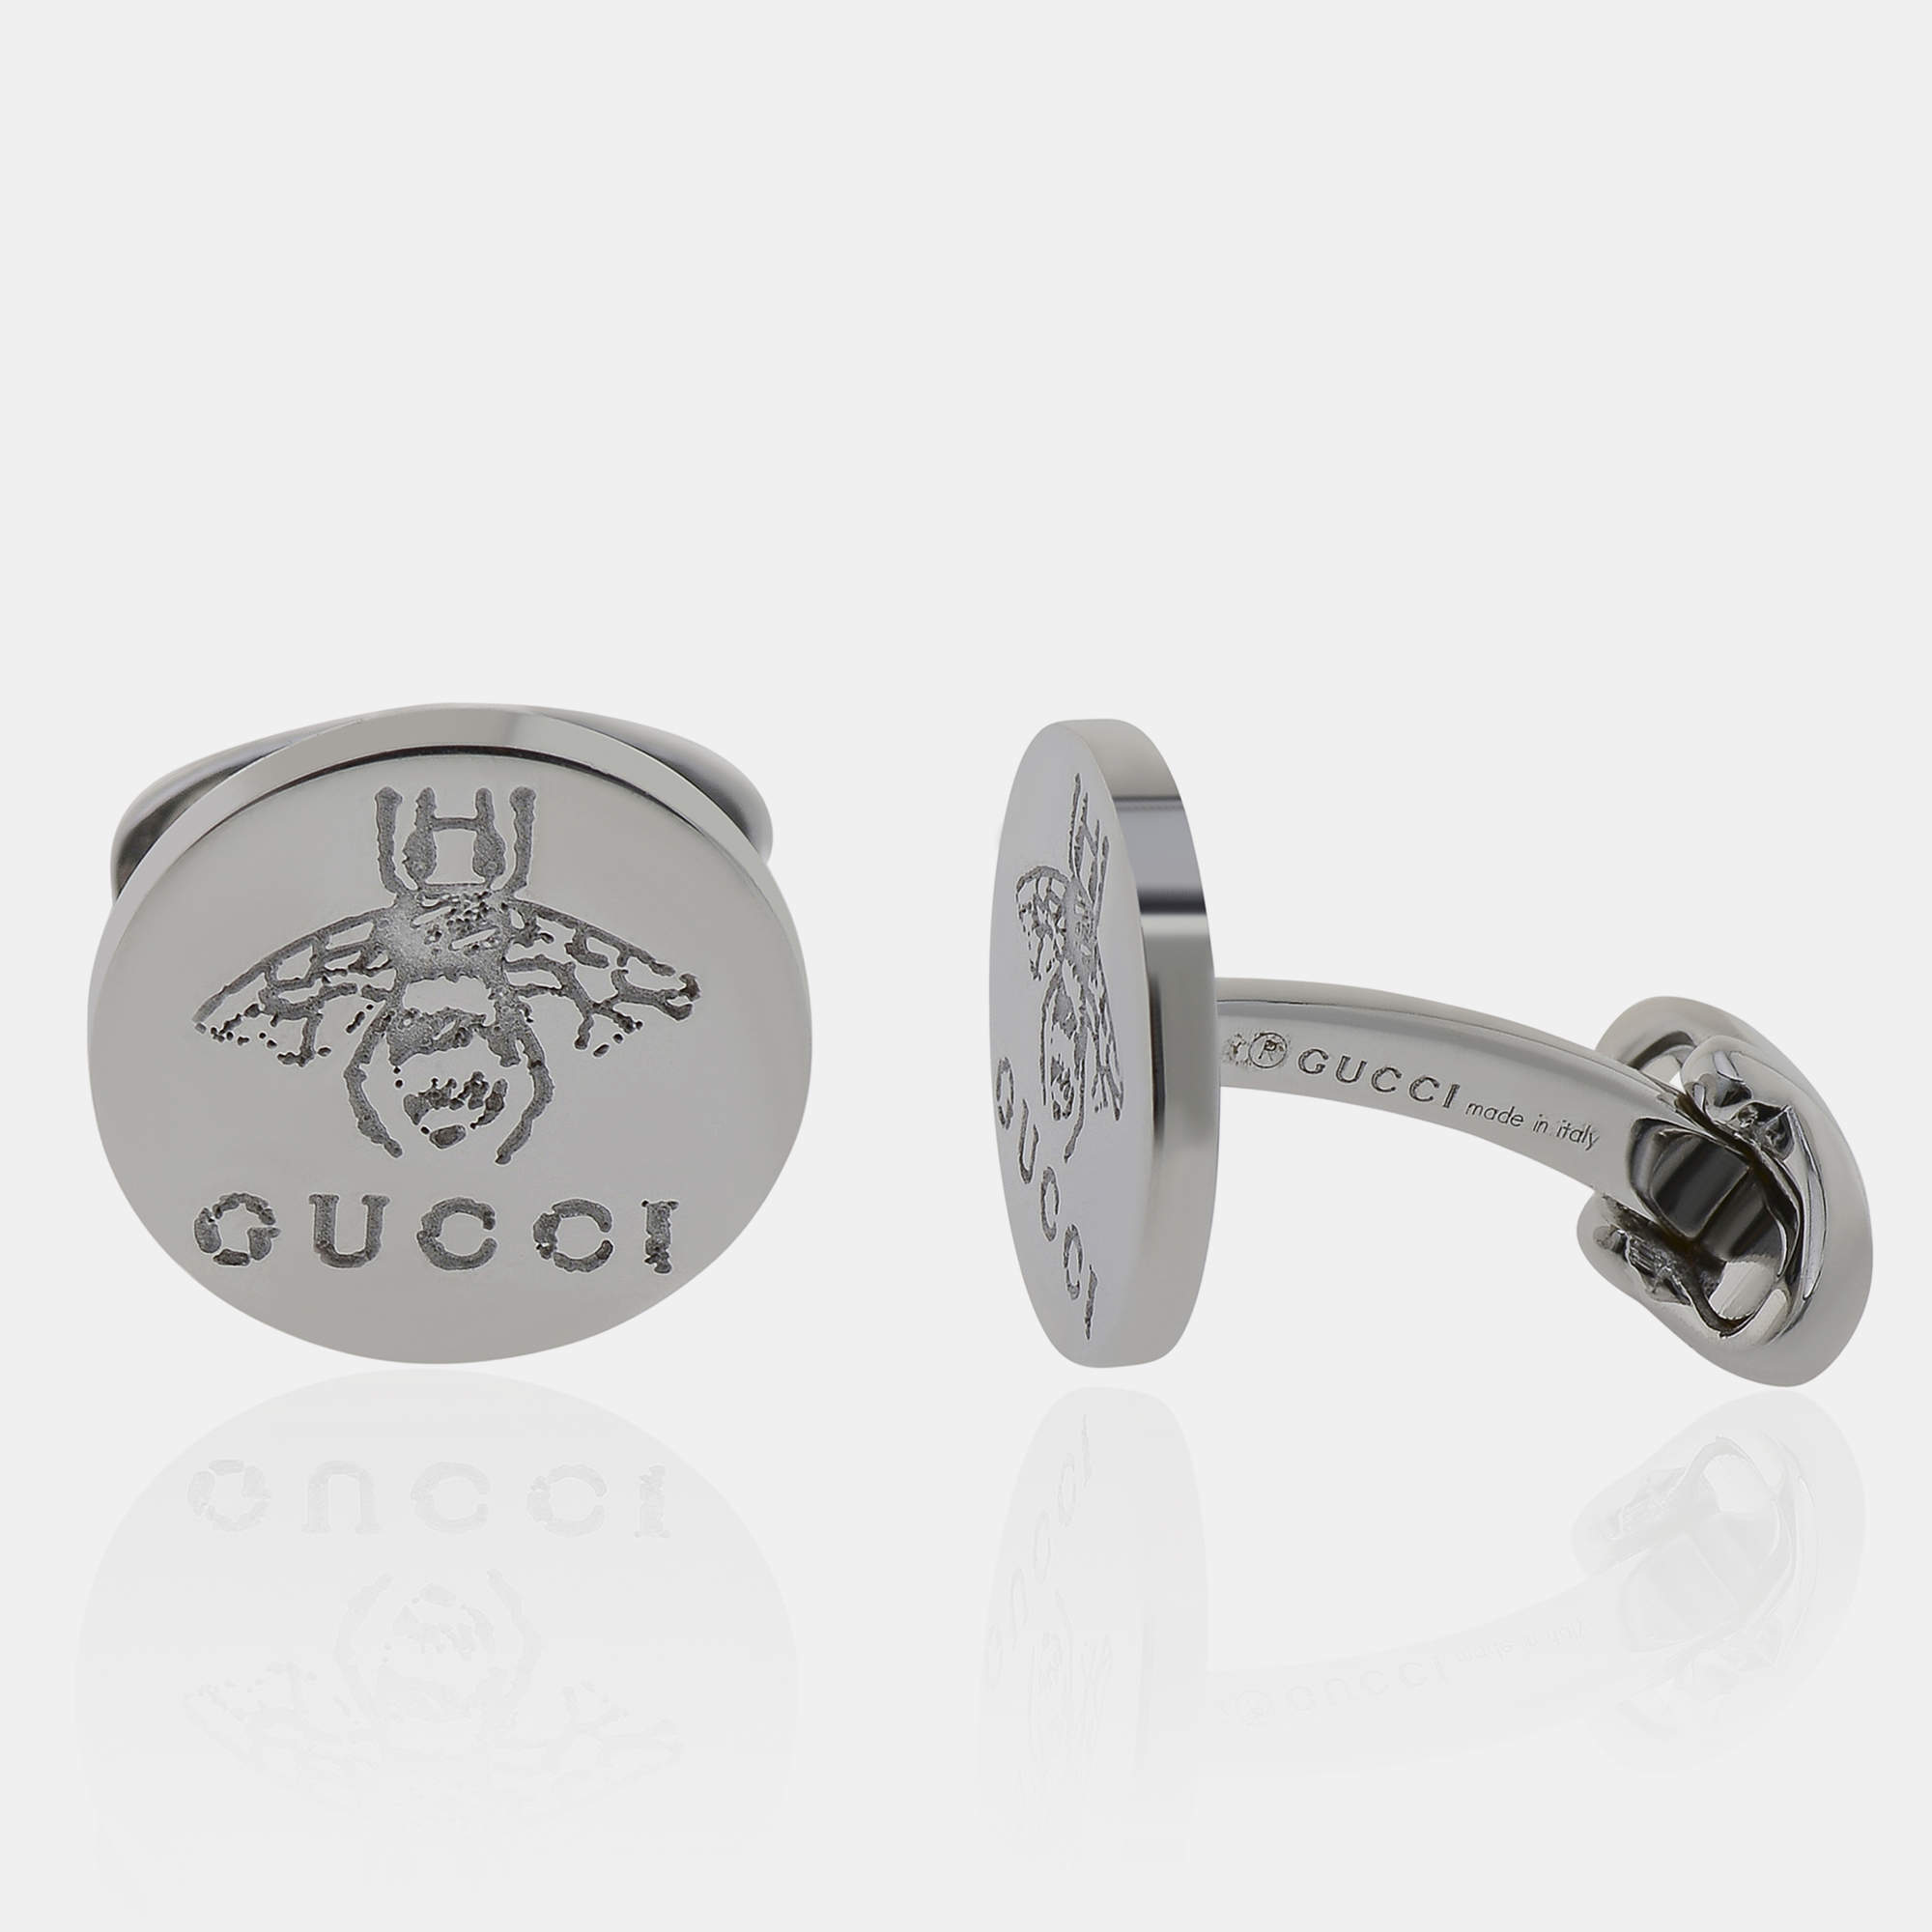 Gucci Trademark Sterling Silver Cufflinks-1 Gucci | TLC